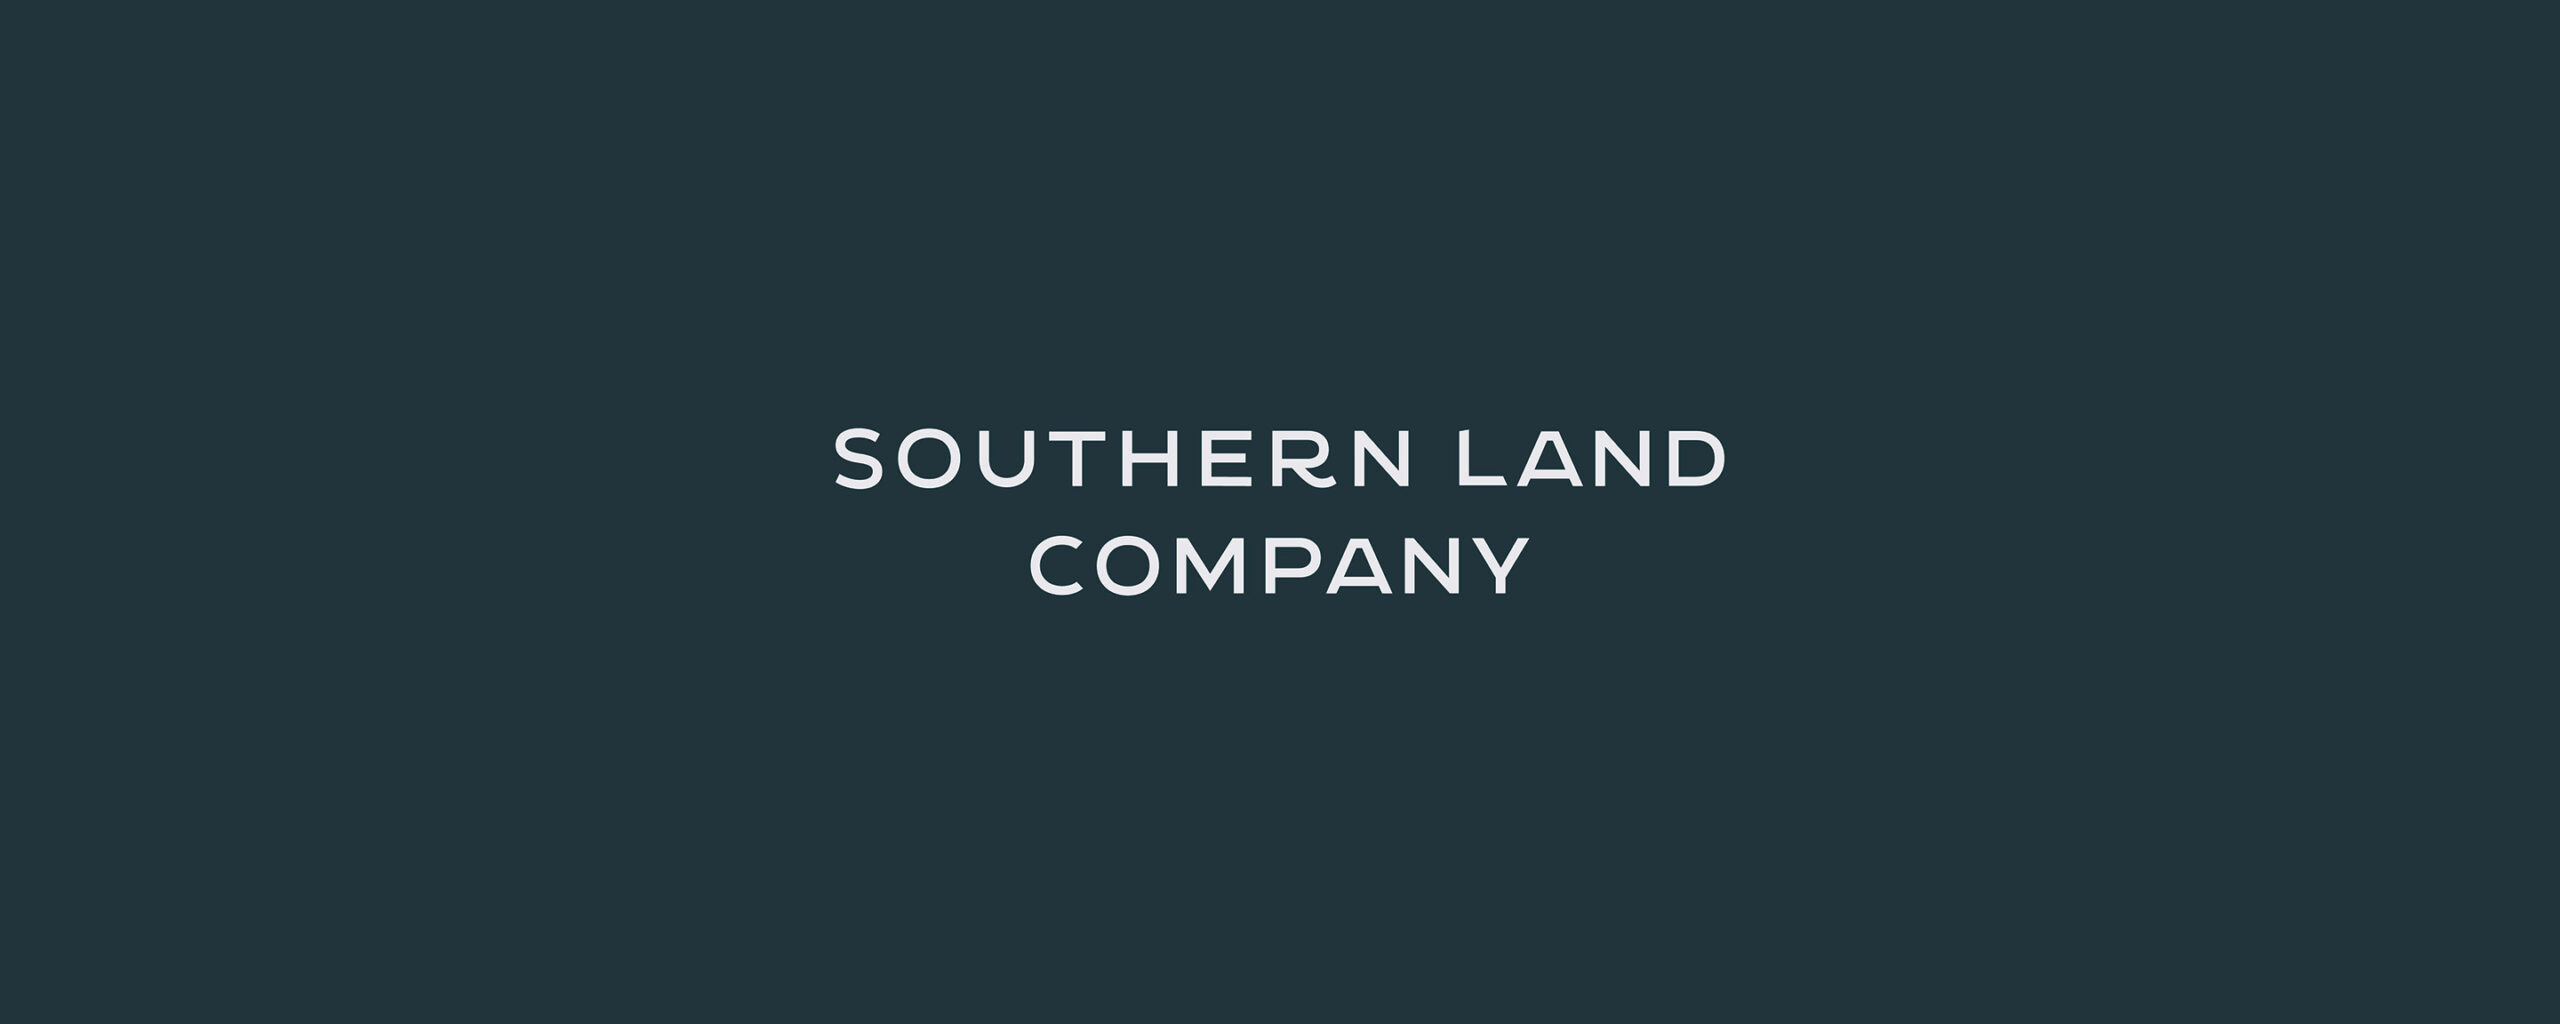 Southern Land Company logo